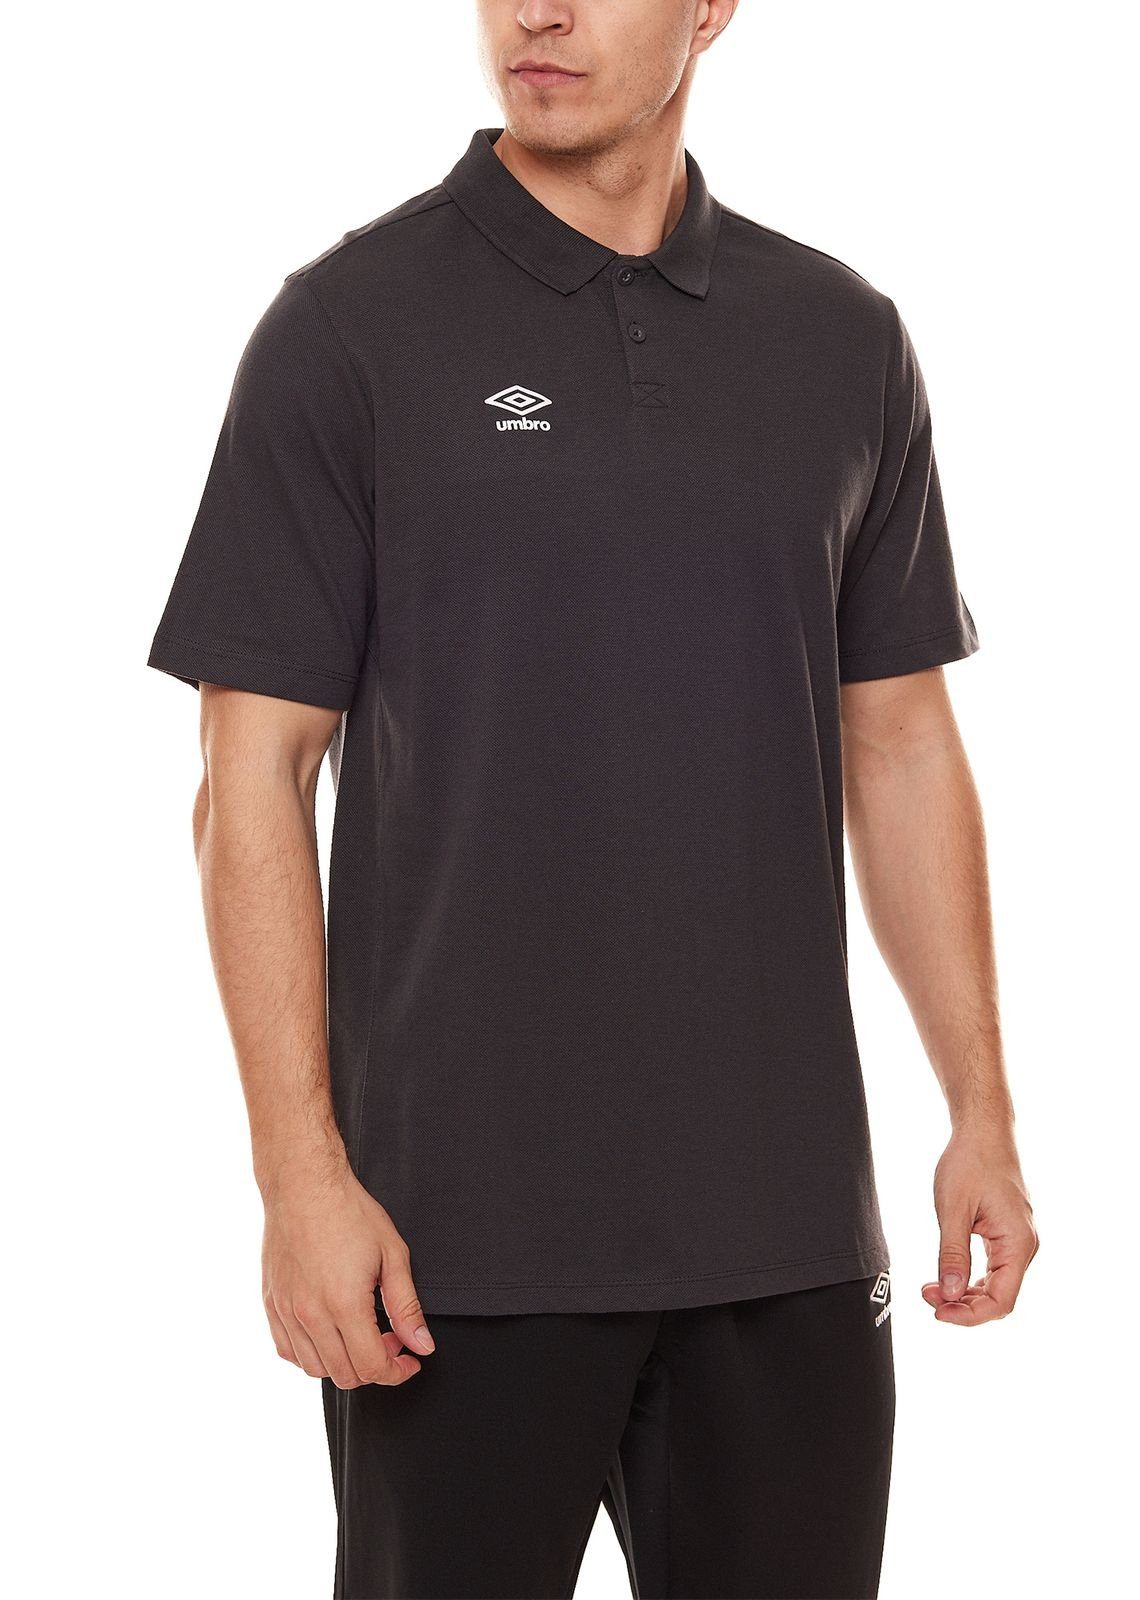 Umbro Rundhalsshirt umbro Dunkelgrau Polo-Shirt komfortables Essential Herren UMTM0323-825 Polohemd Golf-Shirt Club